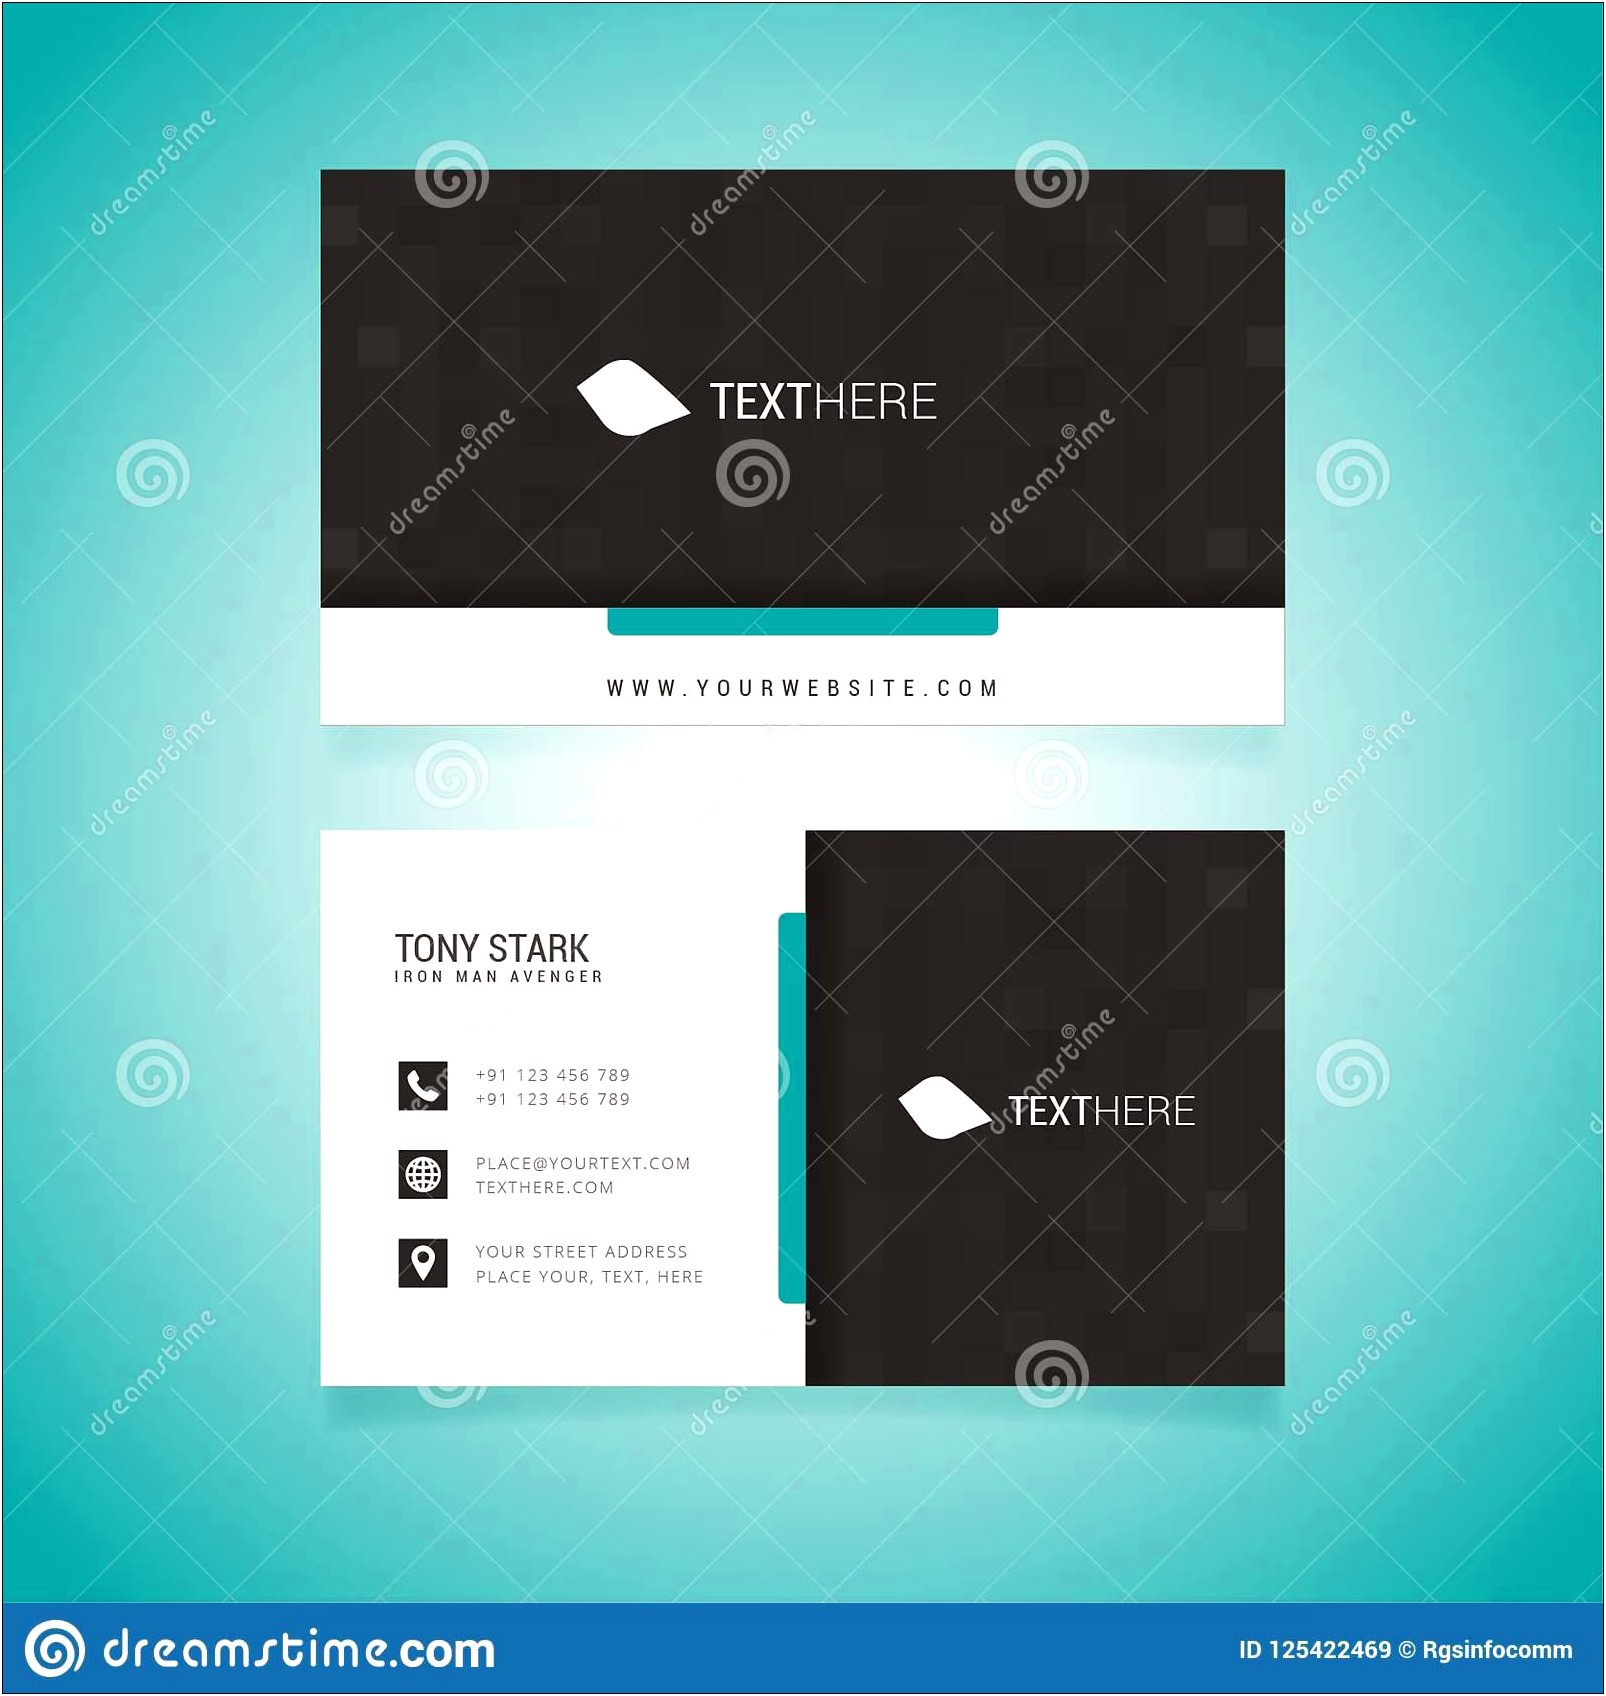 Free Business Card Template Adobe Illustrator